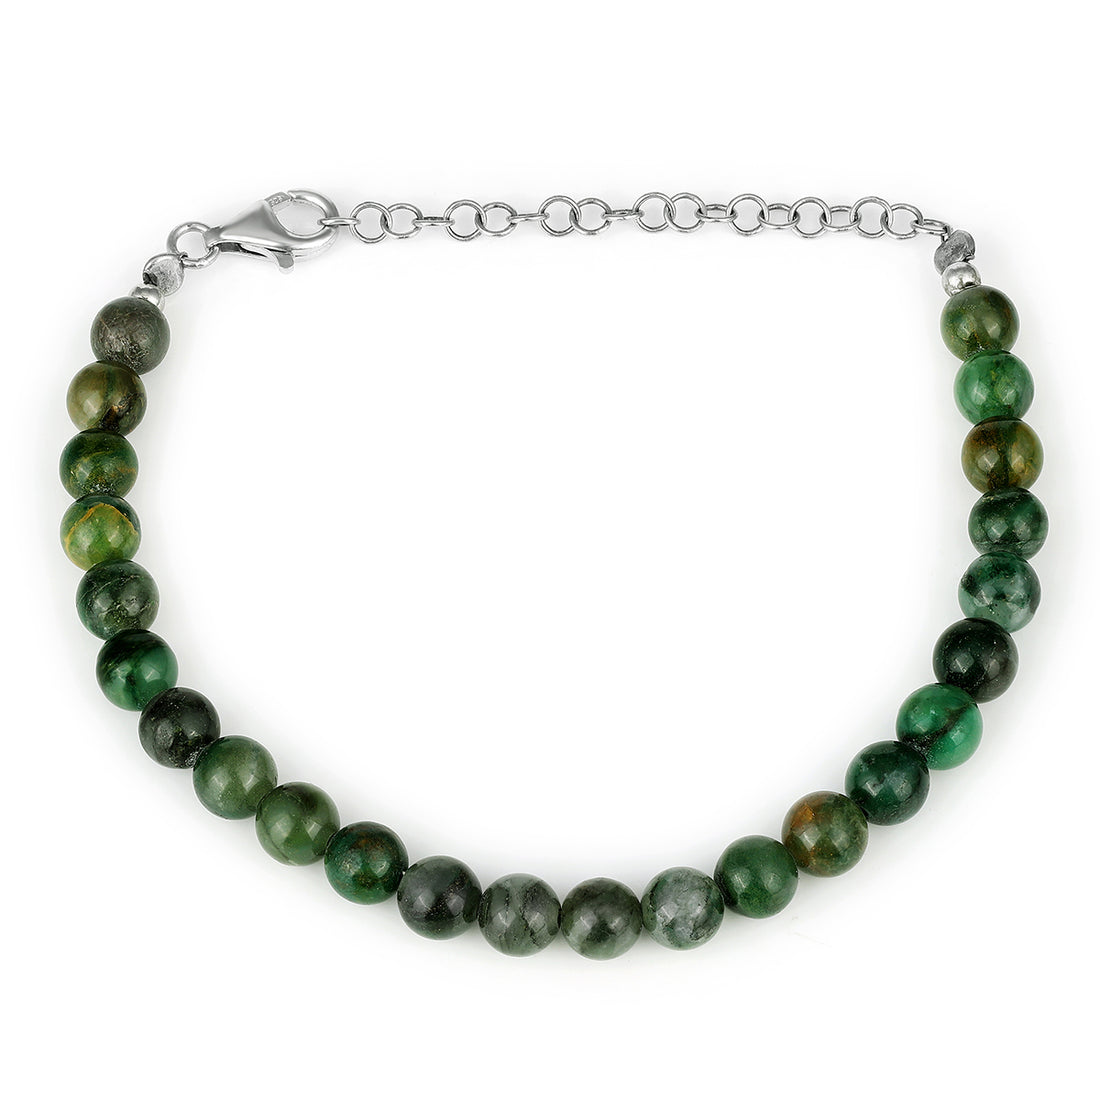 African Jade Unisex Silver Bracelet